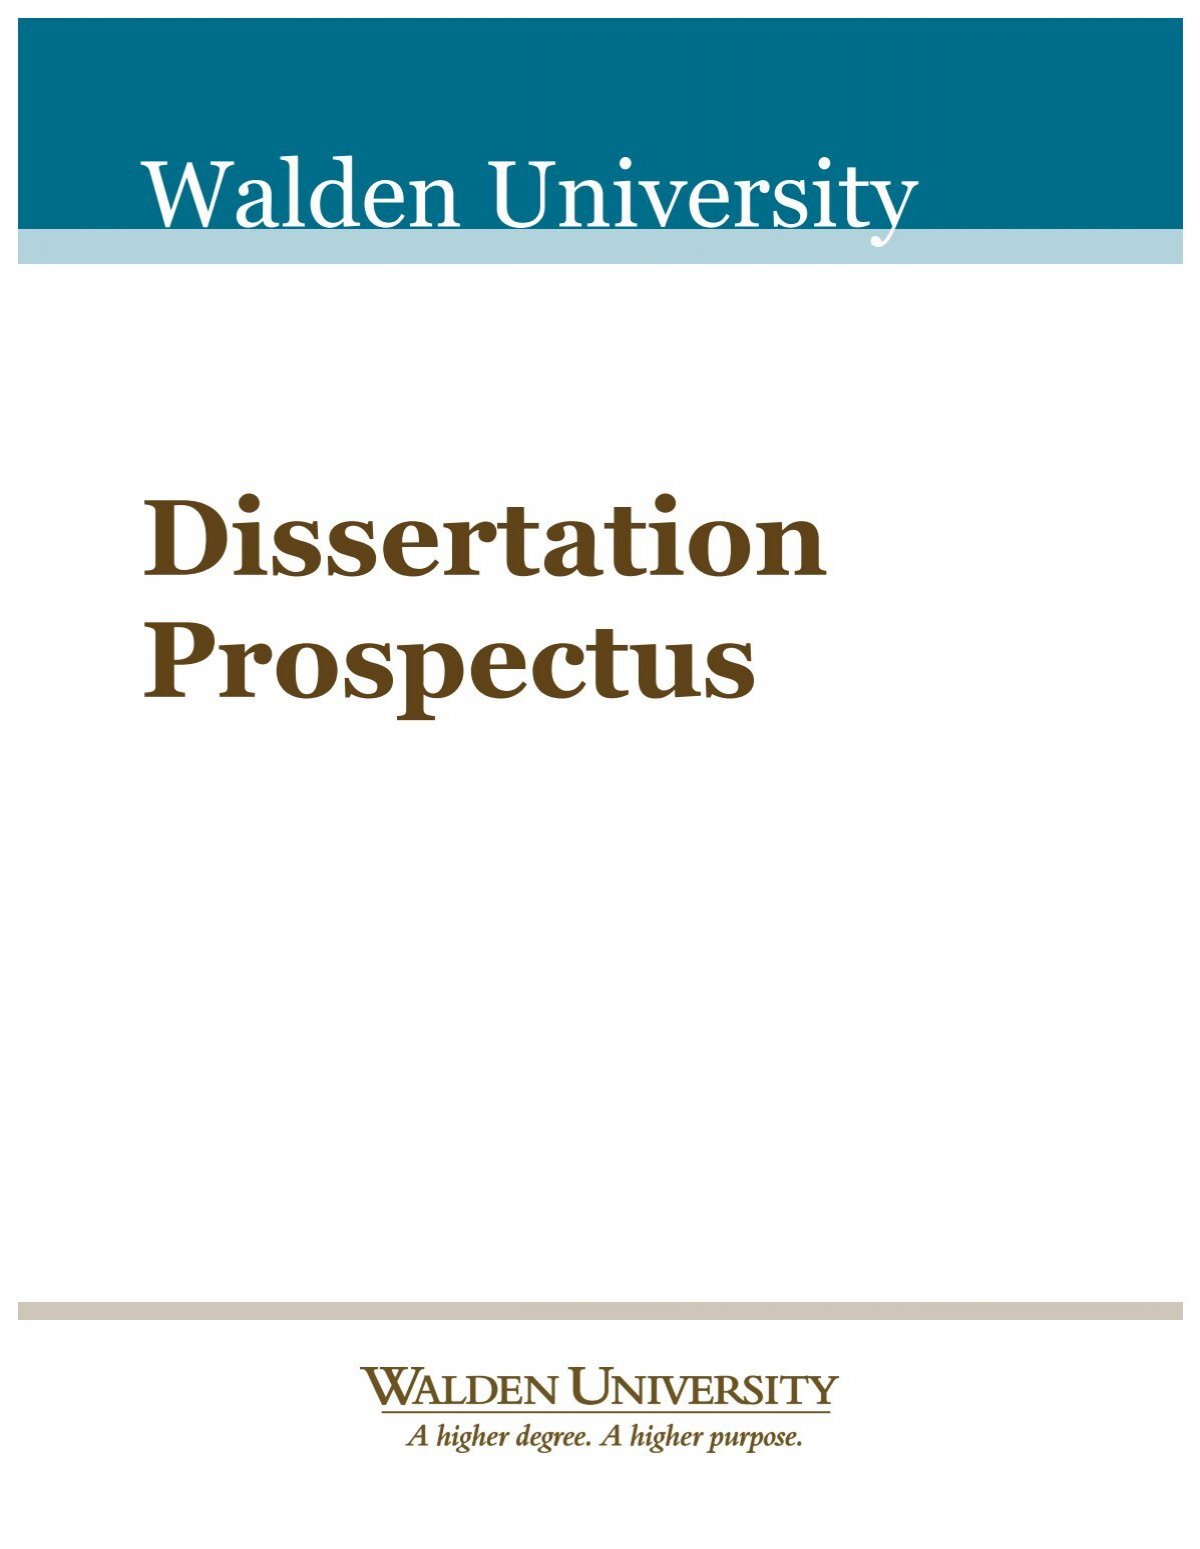 walden dissertation prospectus guide